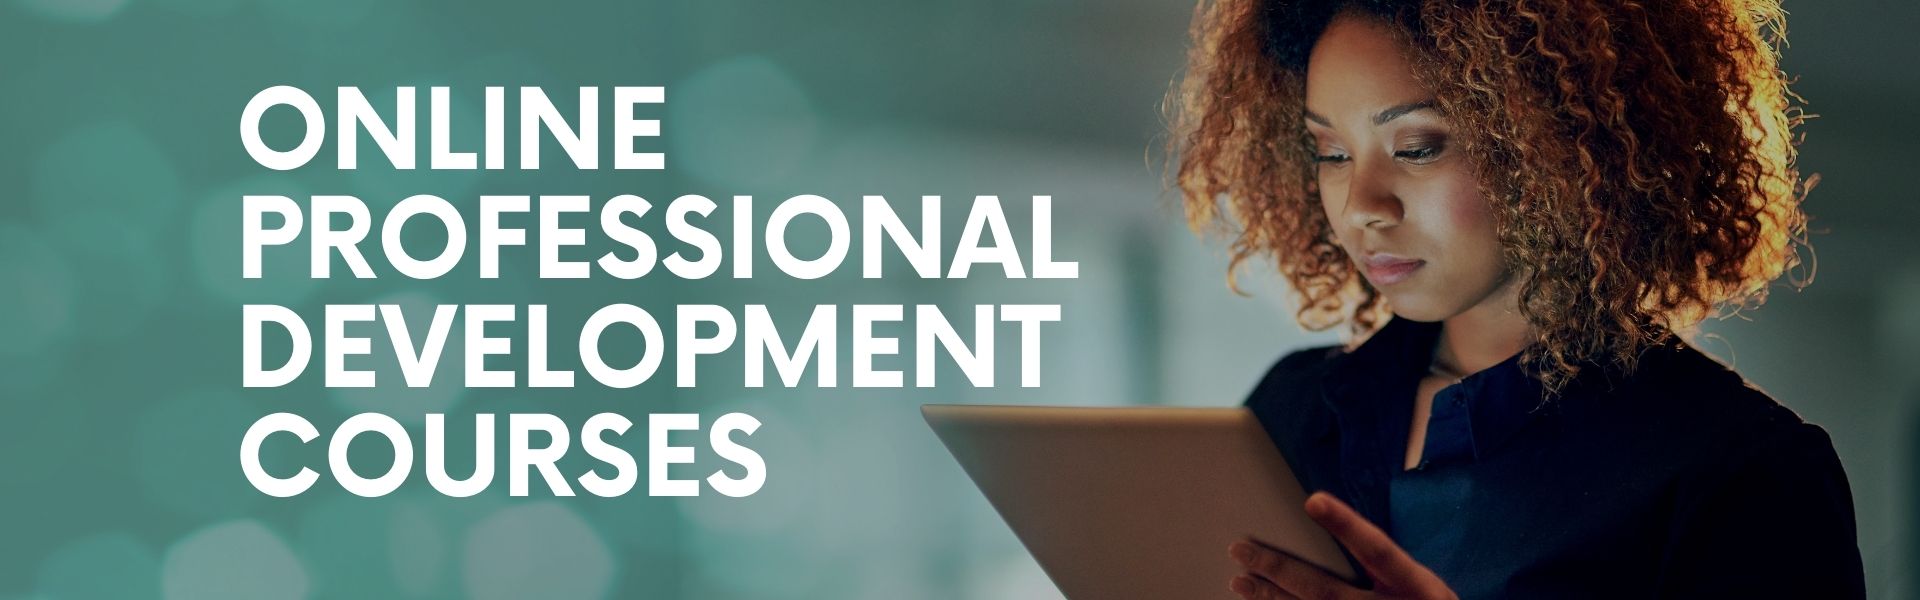 Online professional development courses